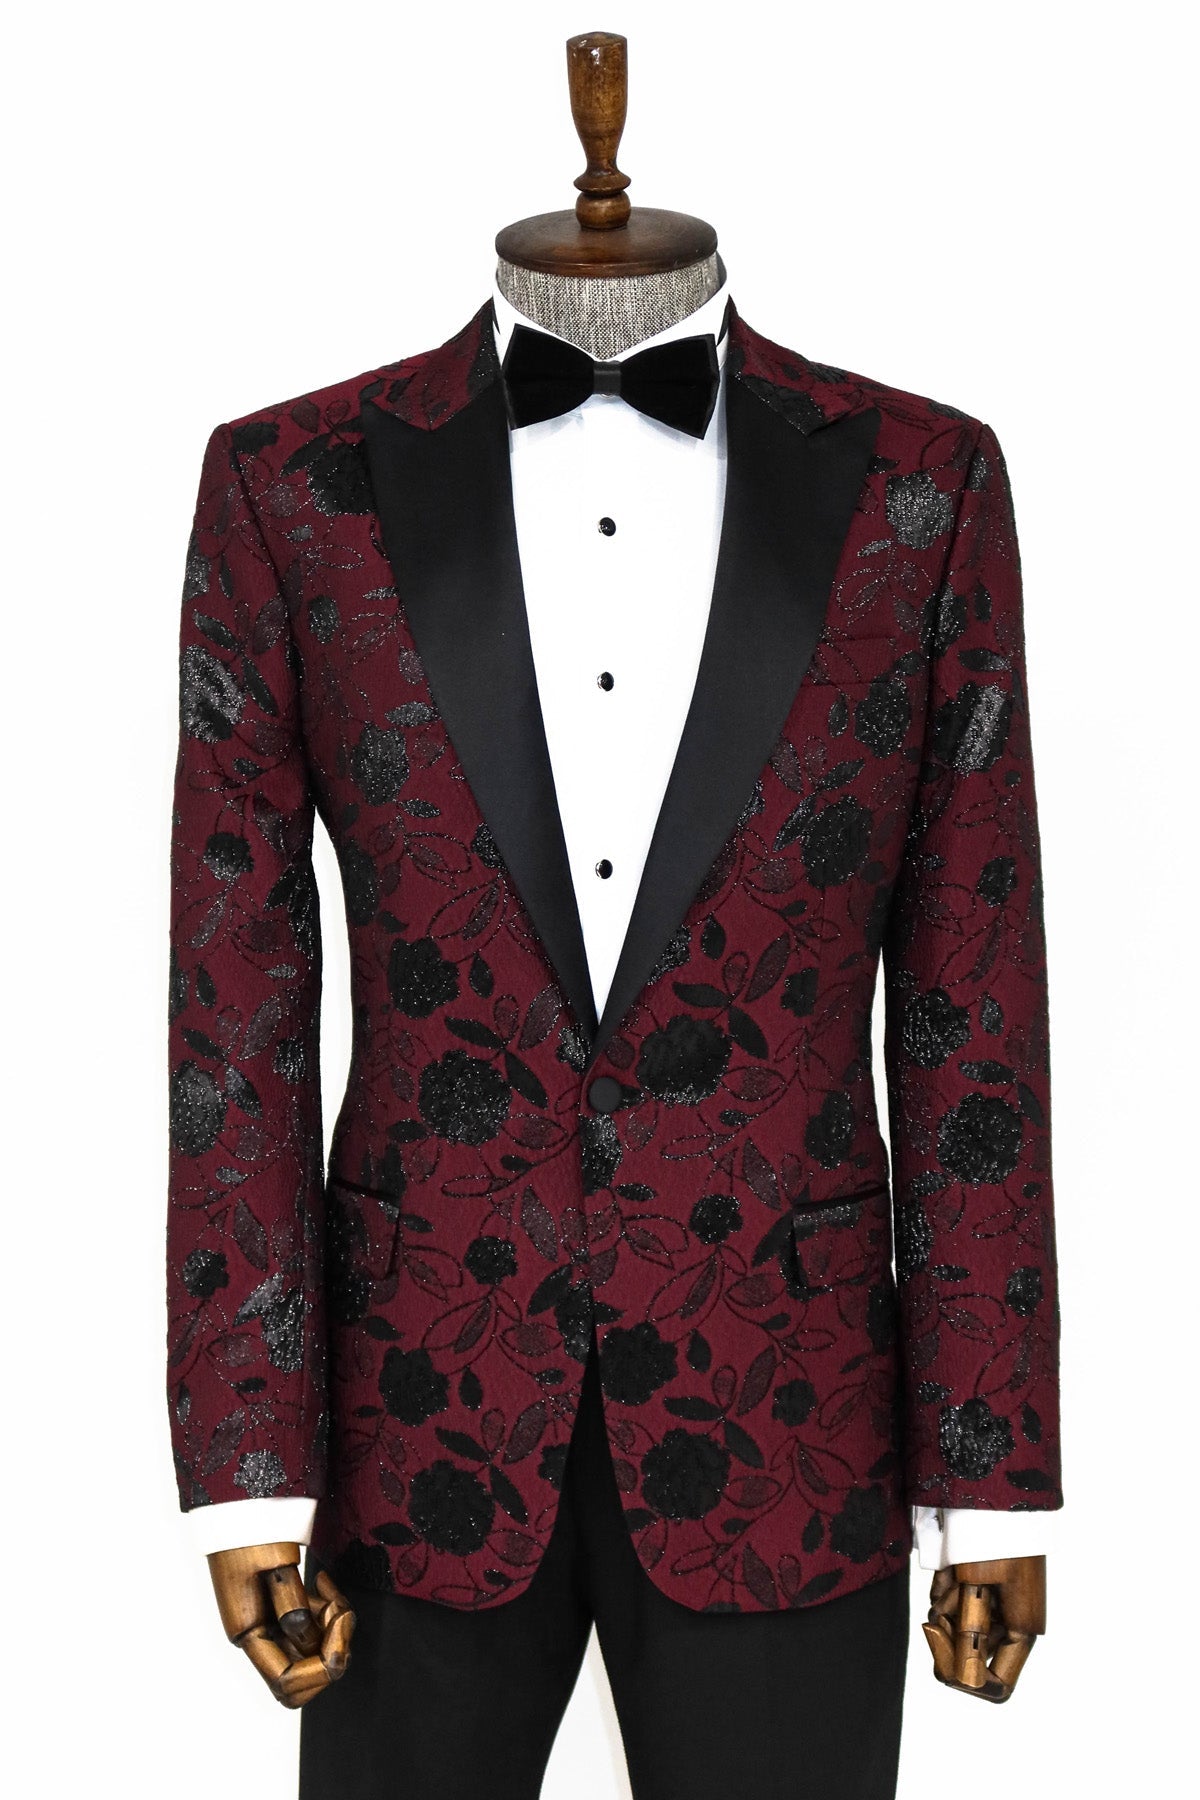 Men's Burgundy Blazer with Black Floral Design - Front View